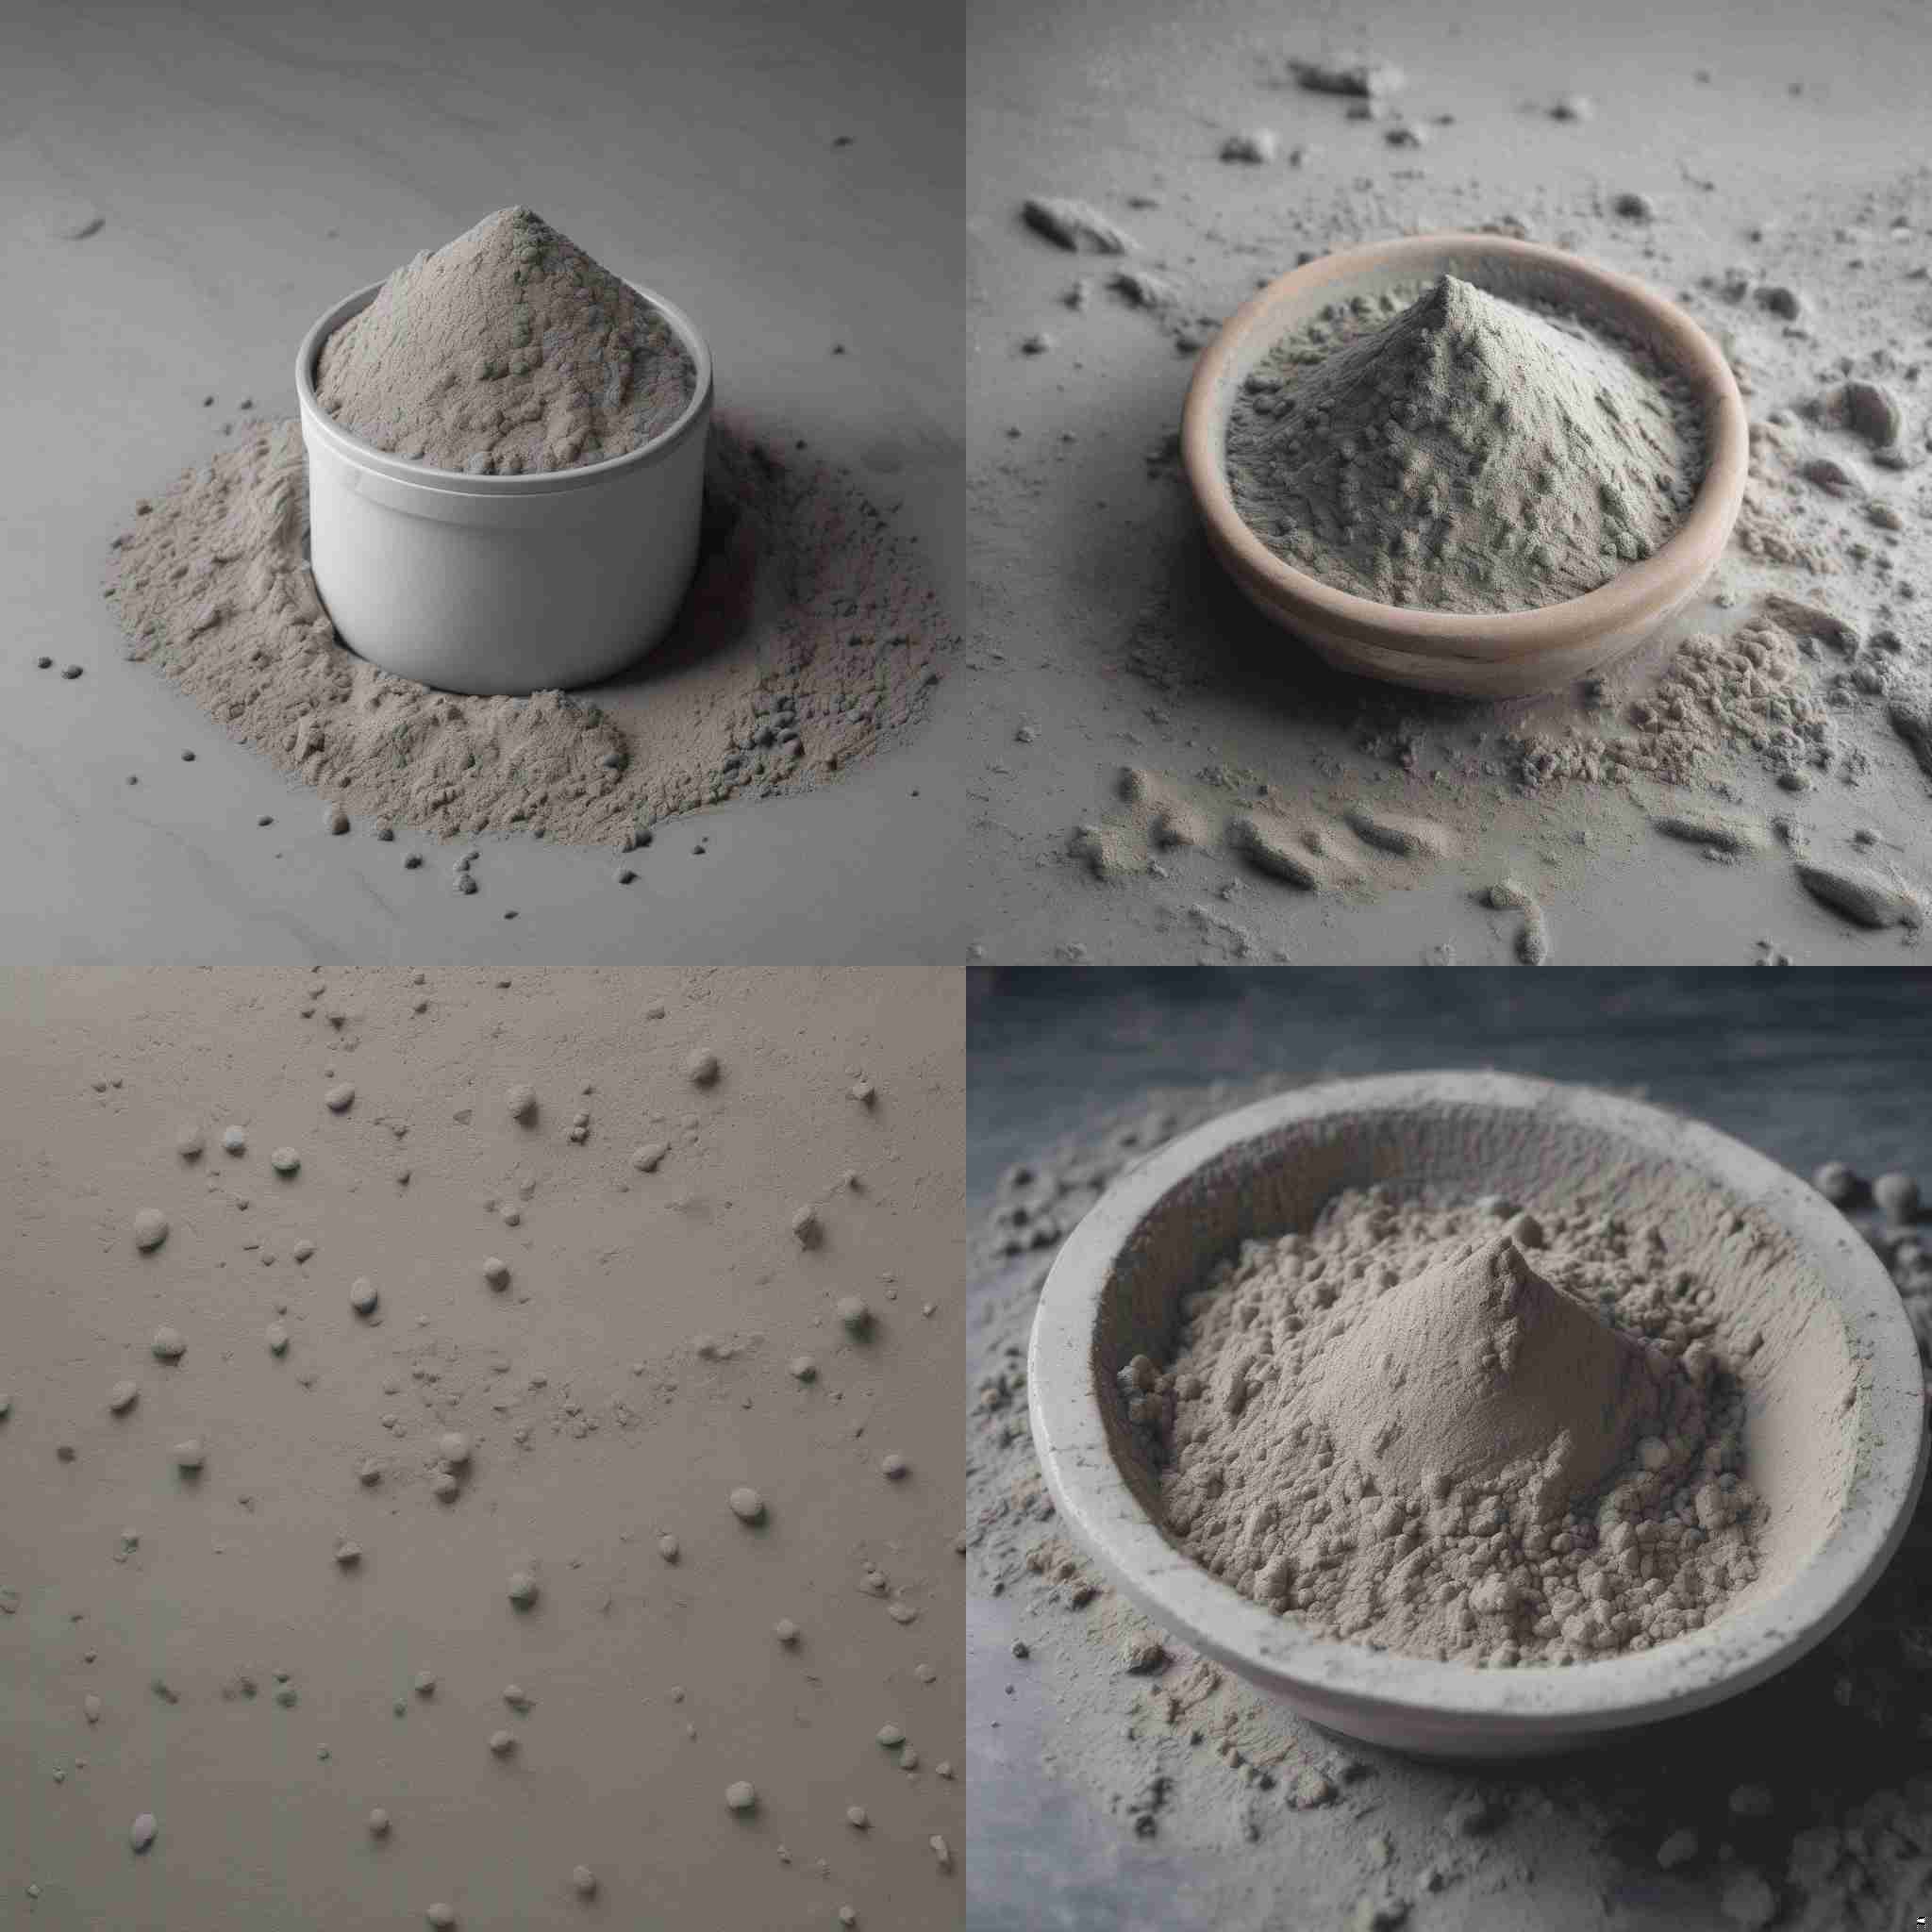 Cement powder kept dry